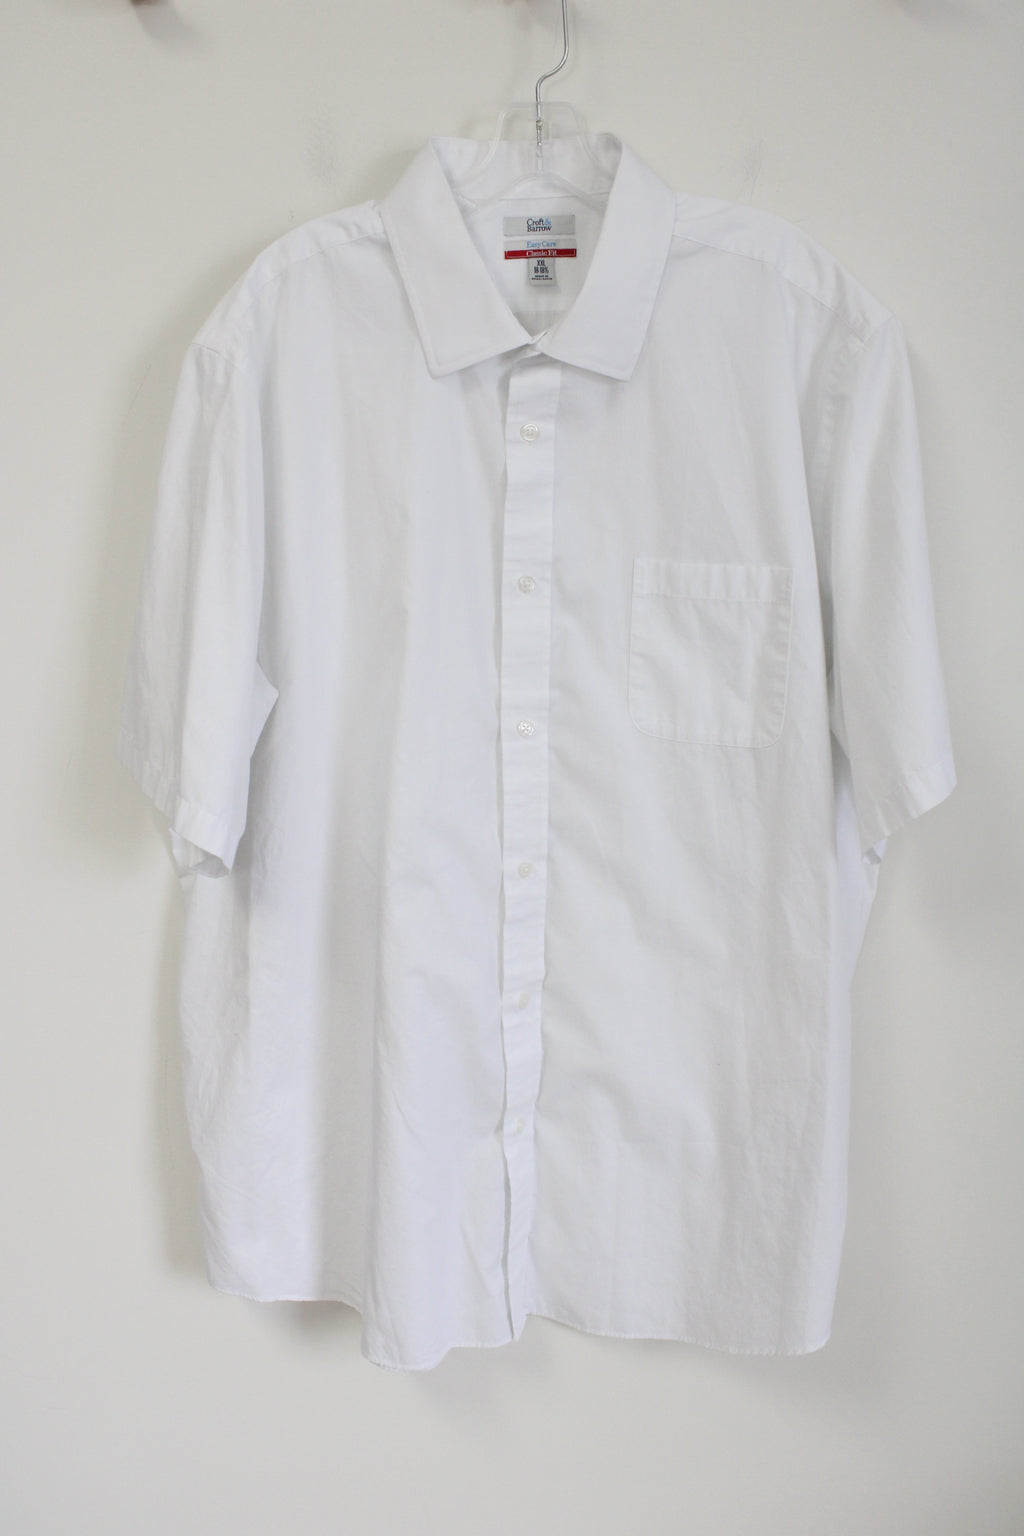 Croft & Barrow Easy Care Classic Fit White Button Down Shirt | XXL